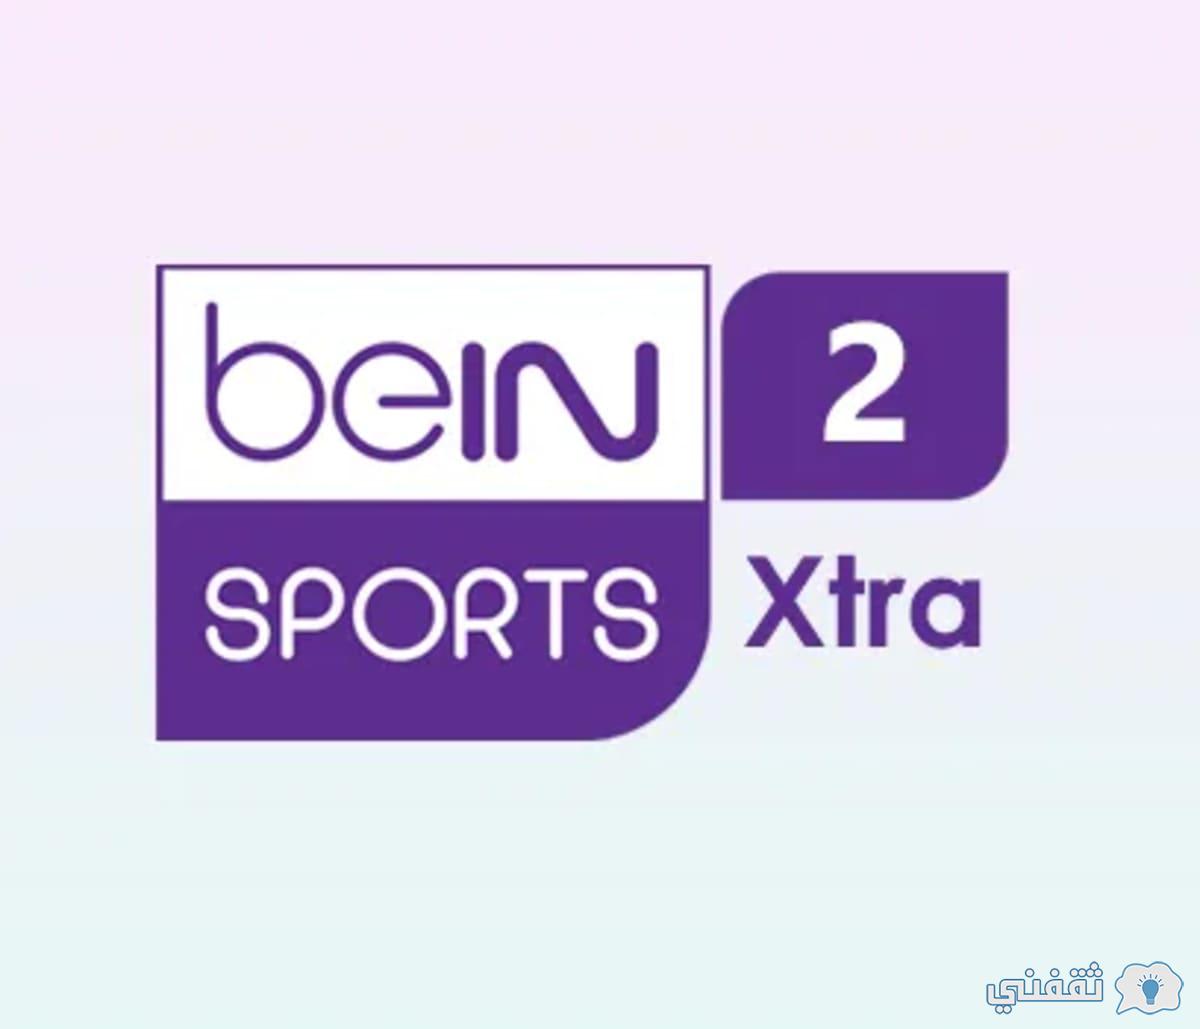 Bein sport 1 maç. Логотип Телеканал Bein Sports. Bein Sports Max 2.